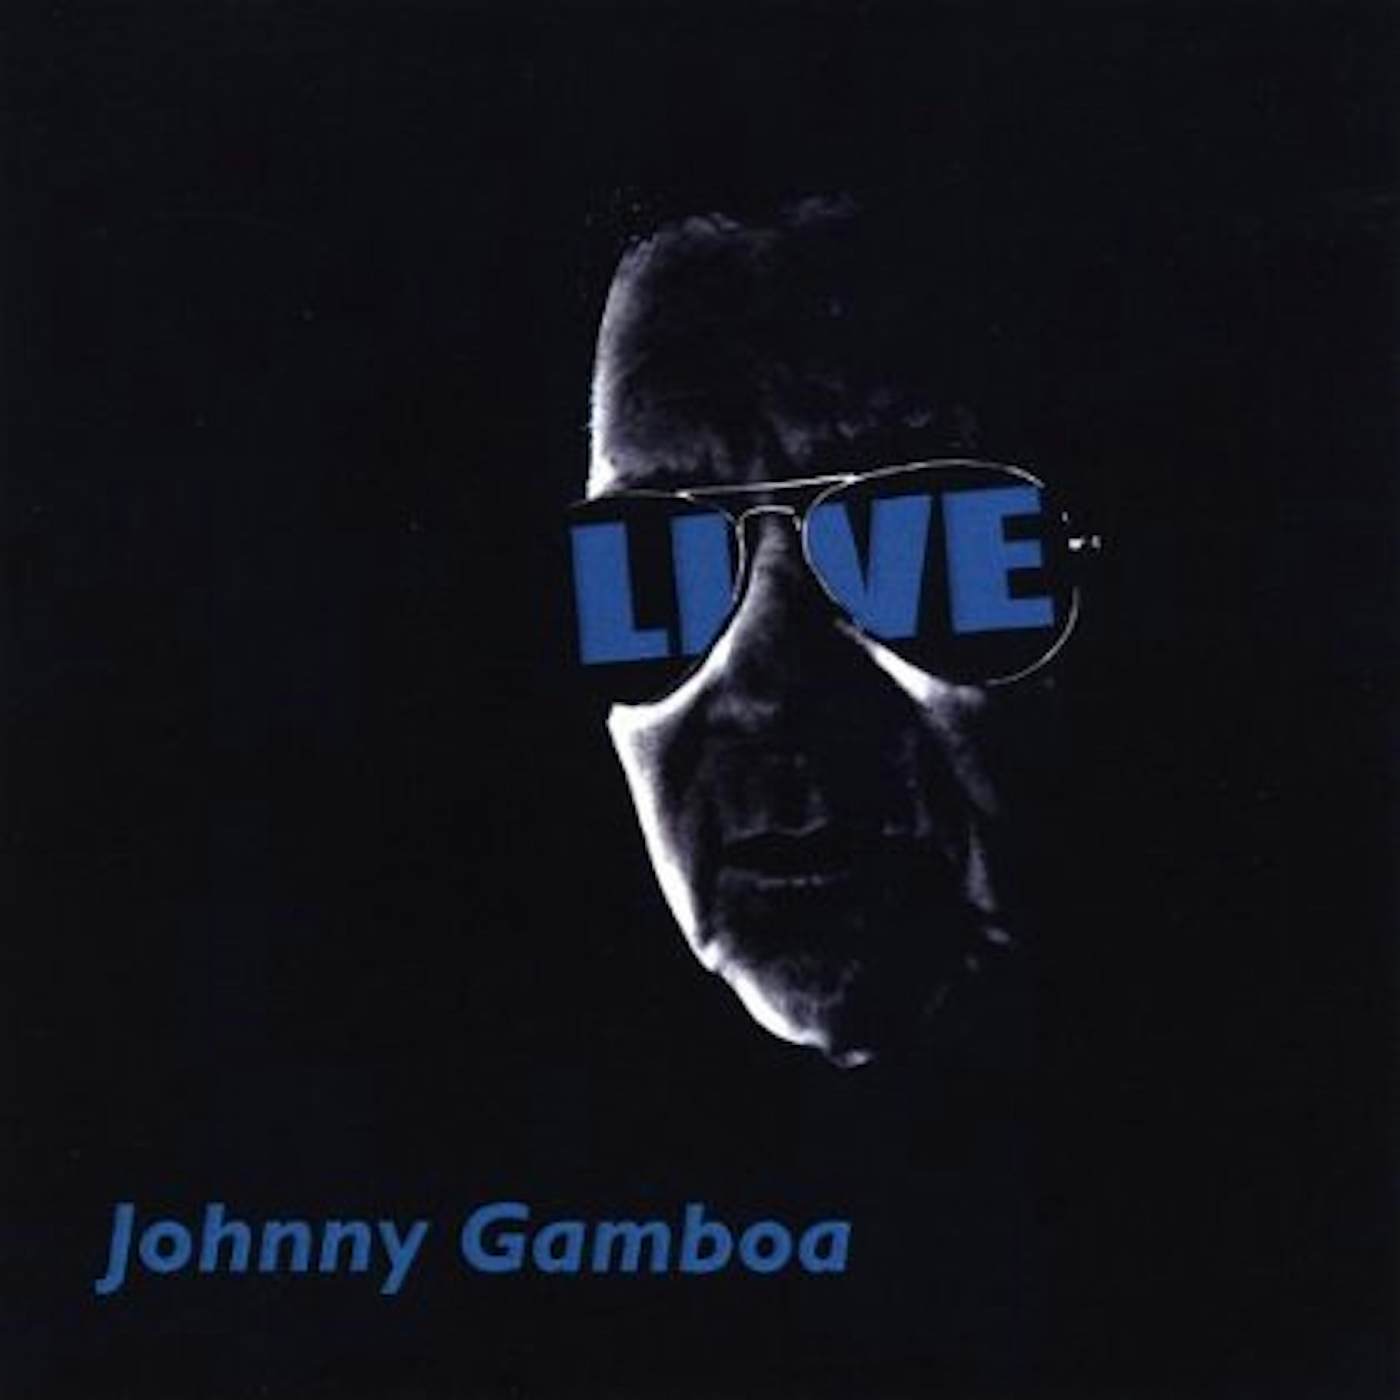 JOHNNY GAMBOA (LIVE) CD